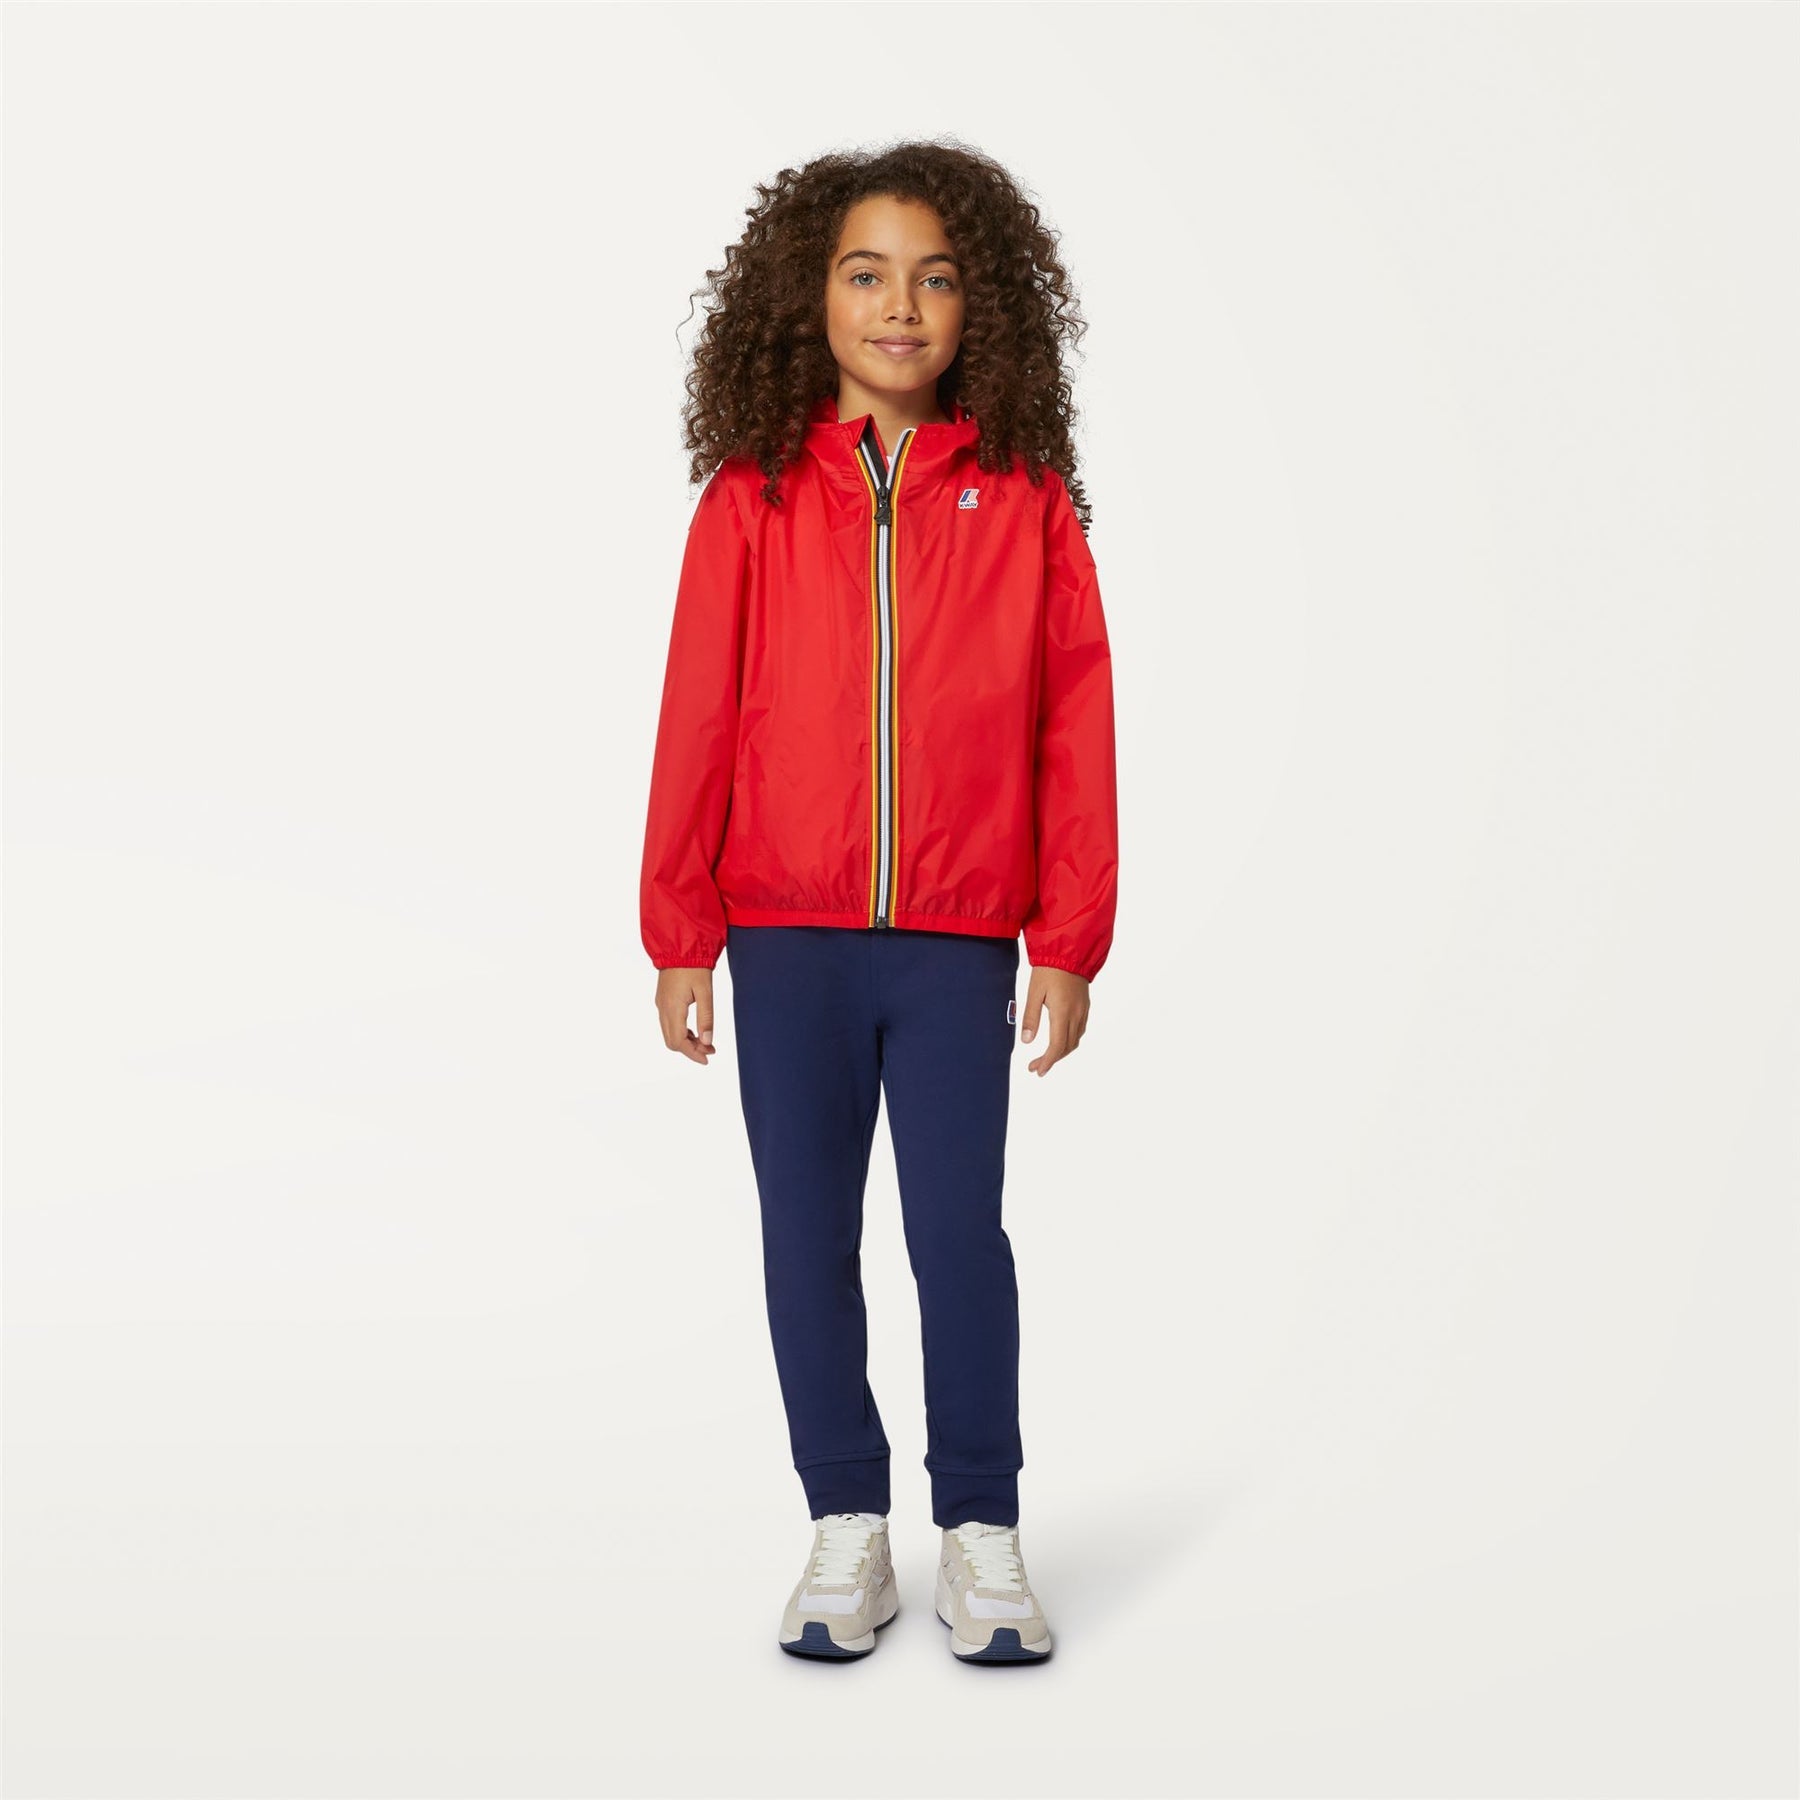 Claude - Kids Packable Full Zip Waterproof Rain Jacket in Red